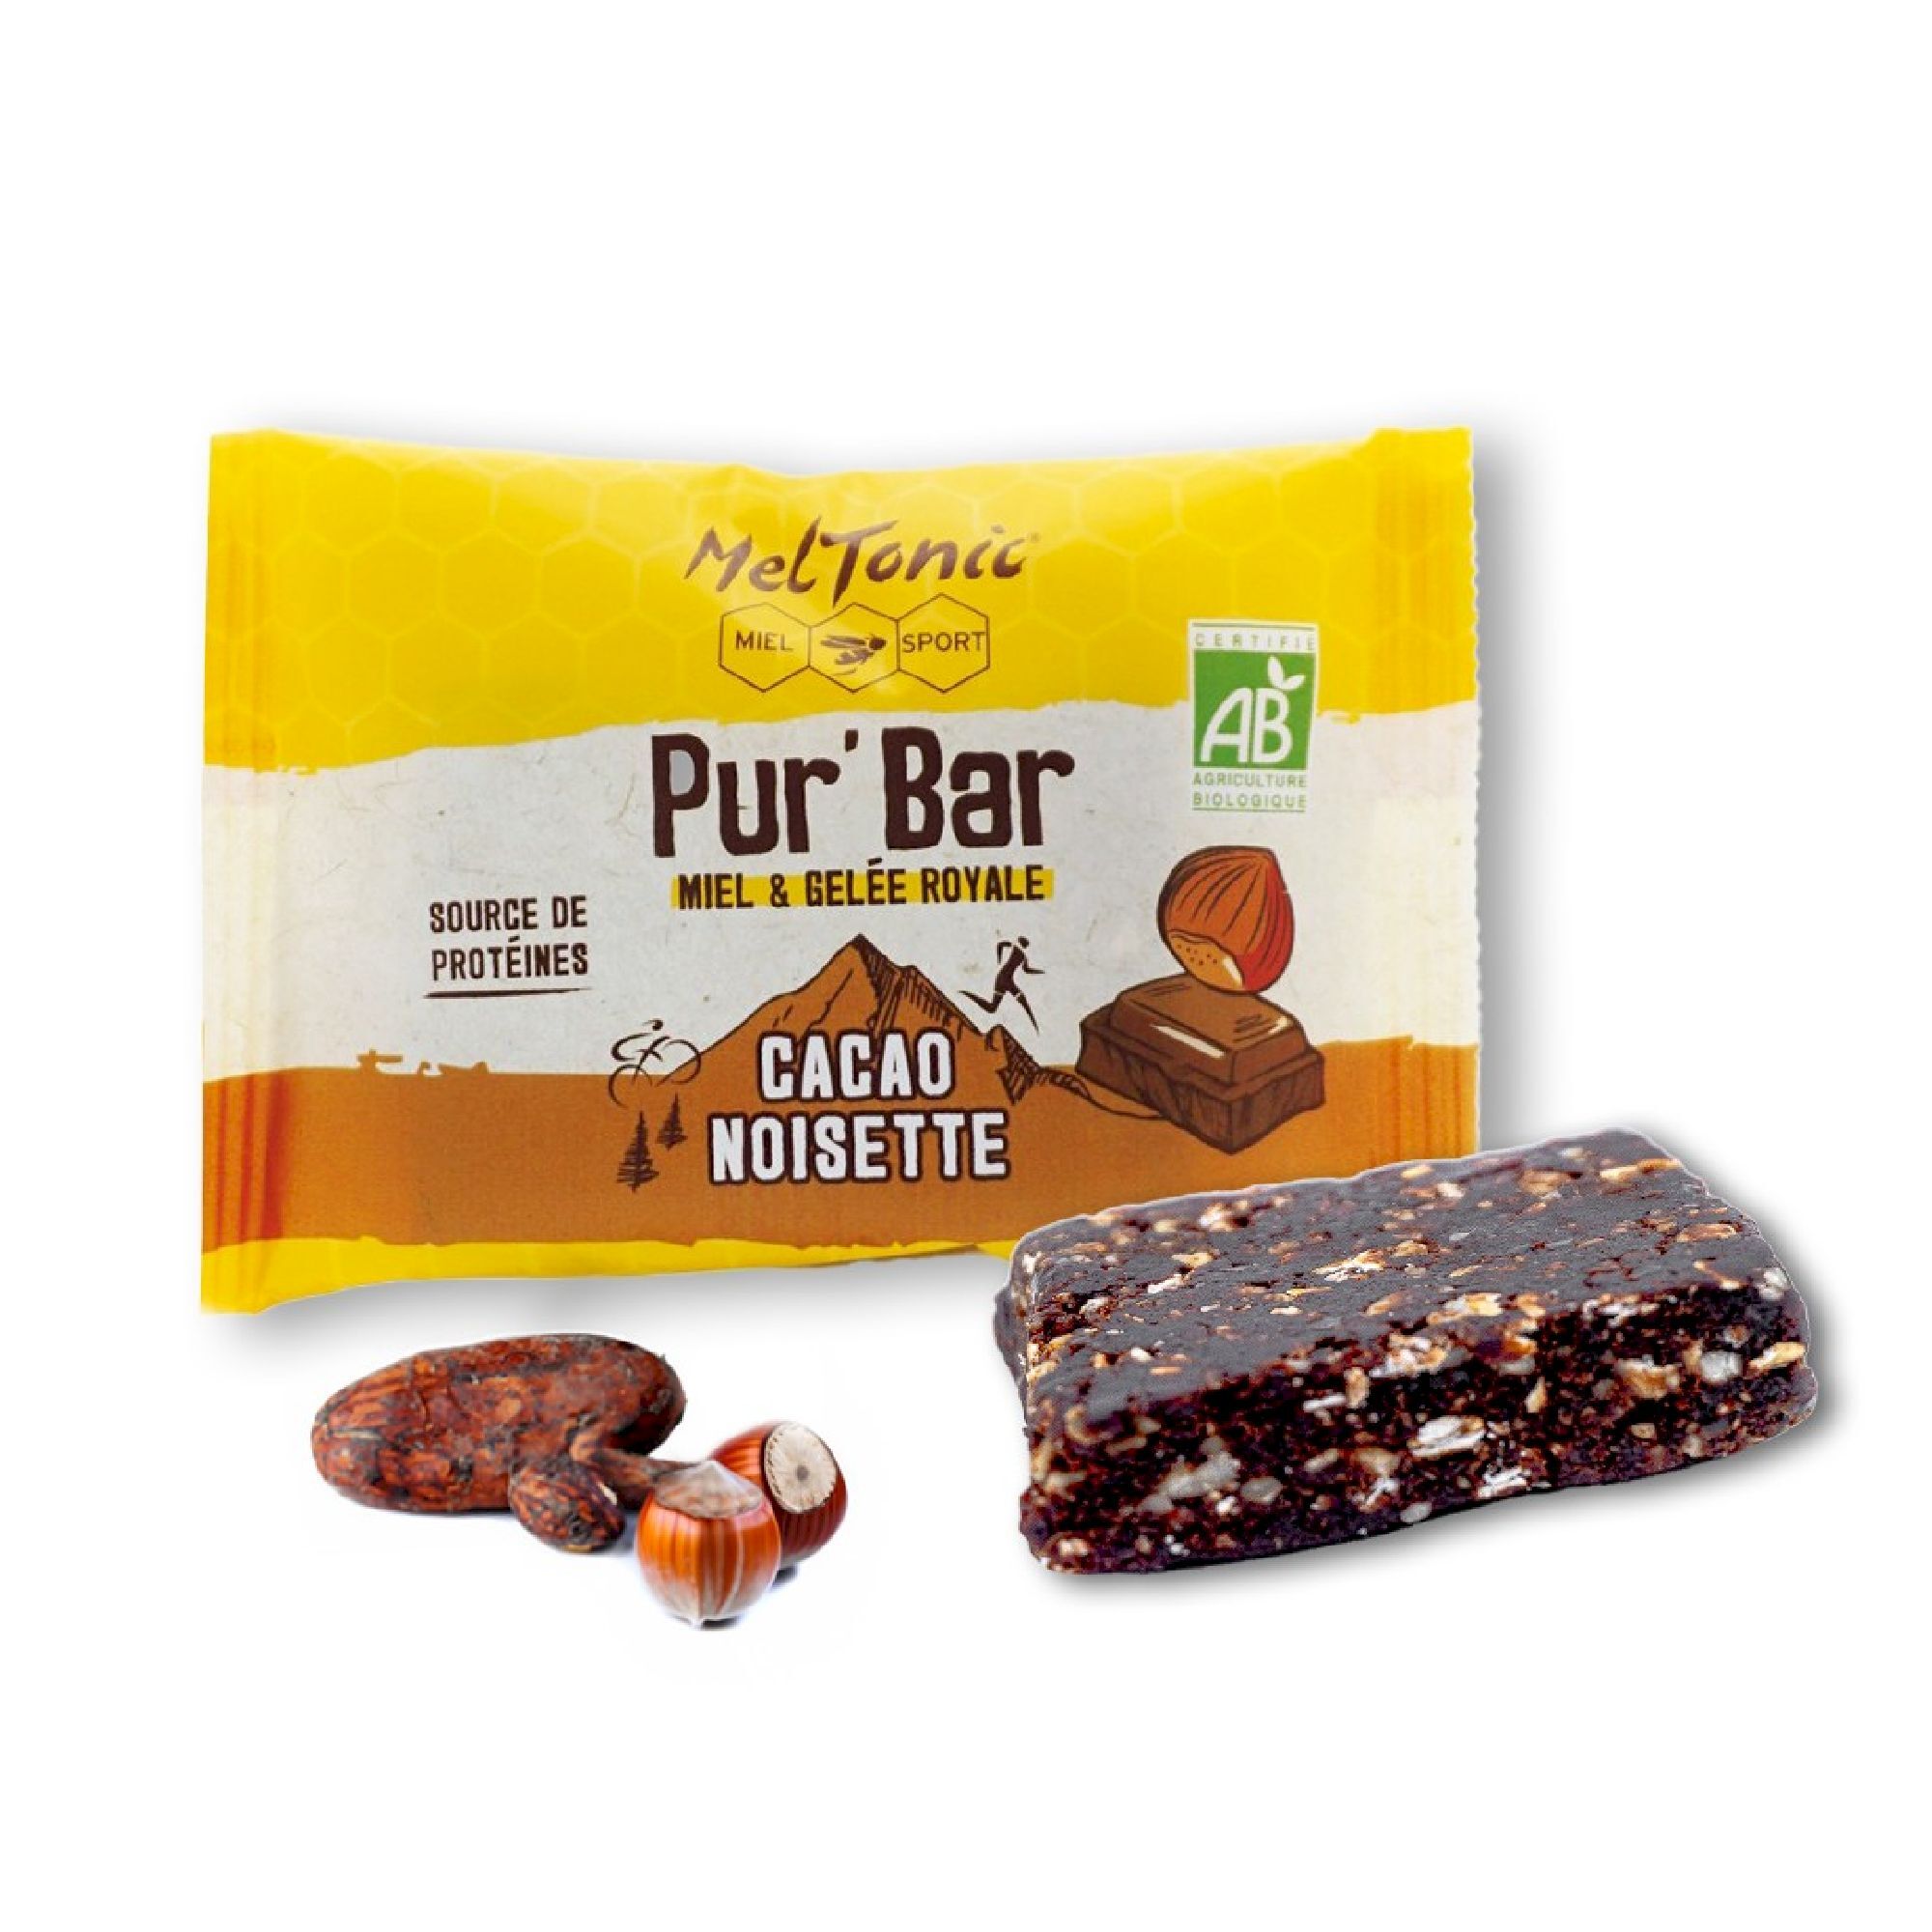 Meltonic Pur' Bar Bio Cacao Noisette Miel & Gelée Royale - Energibar | Hardloop